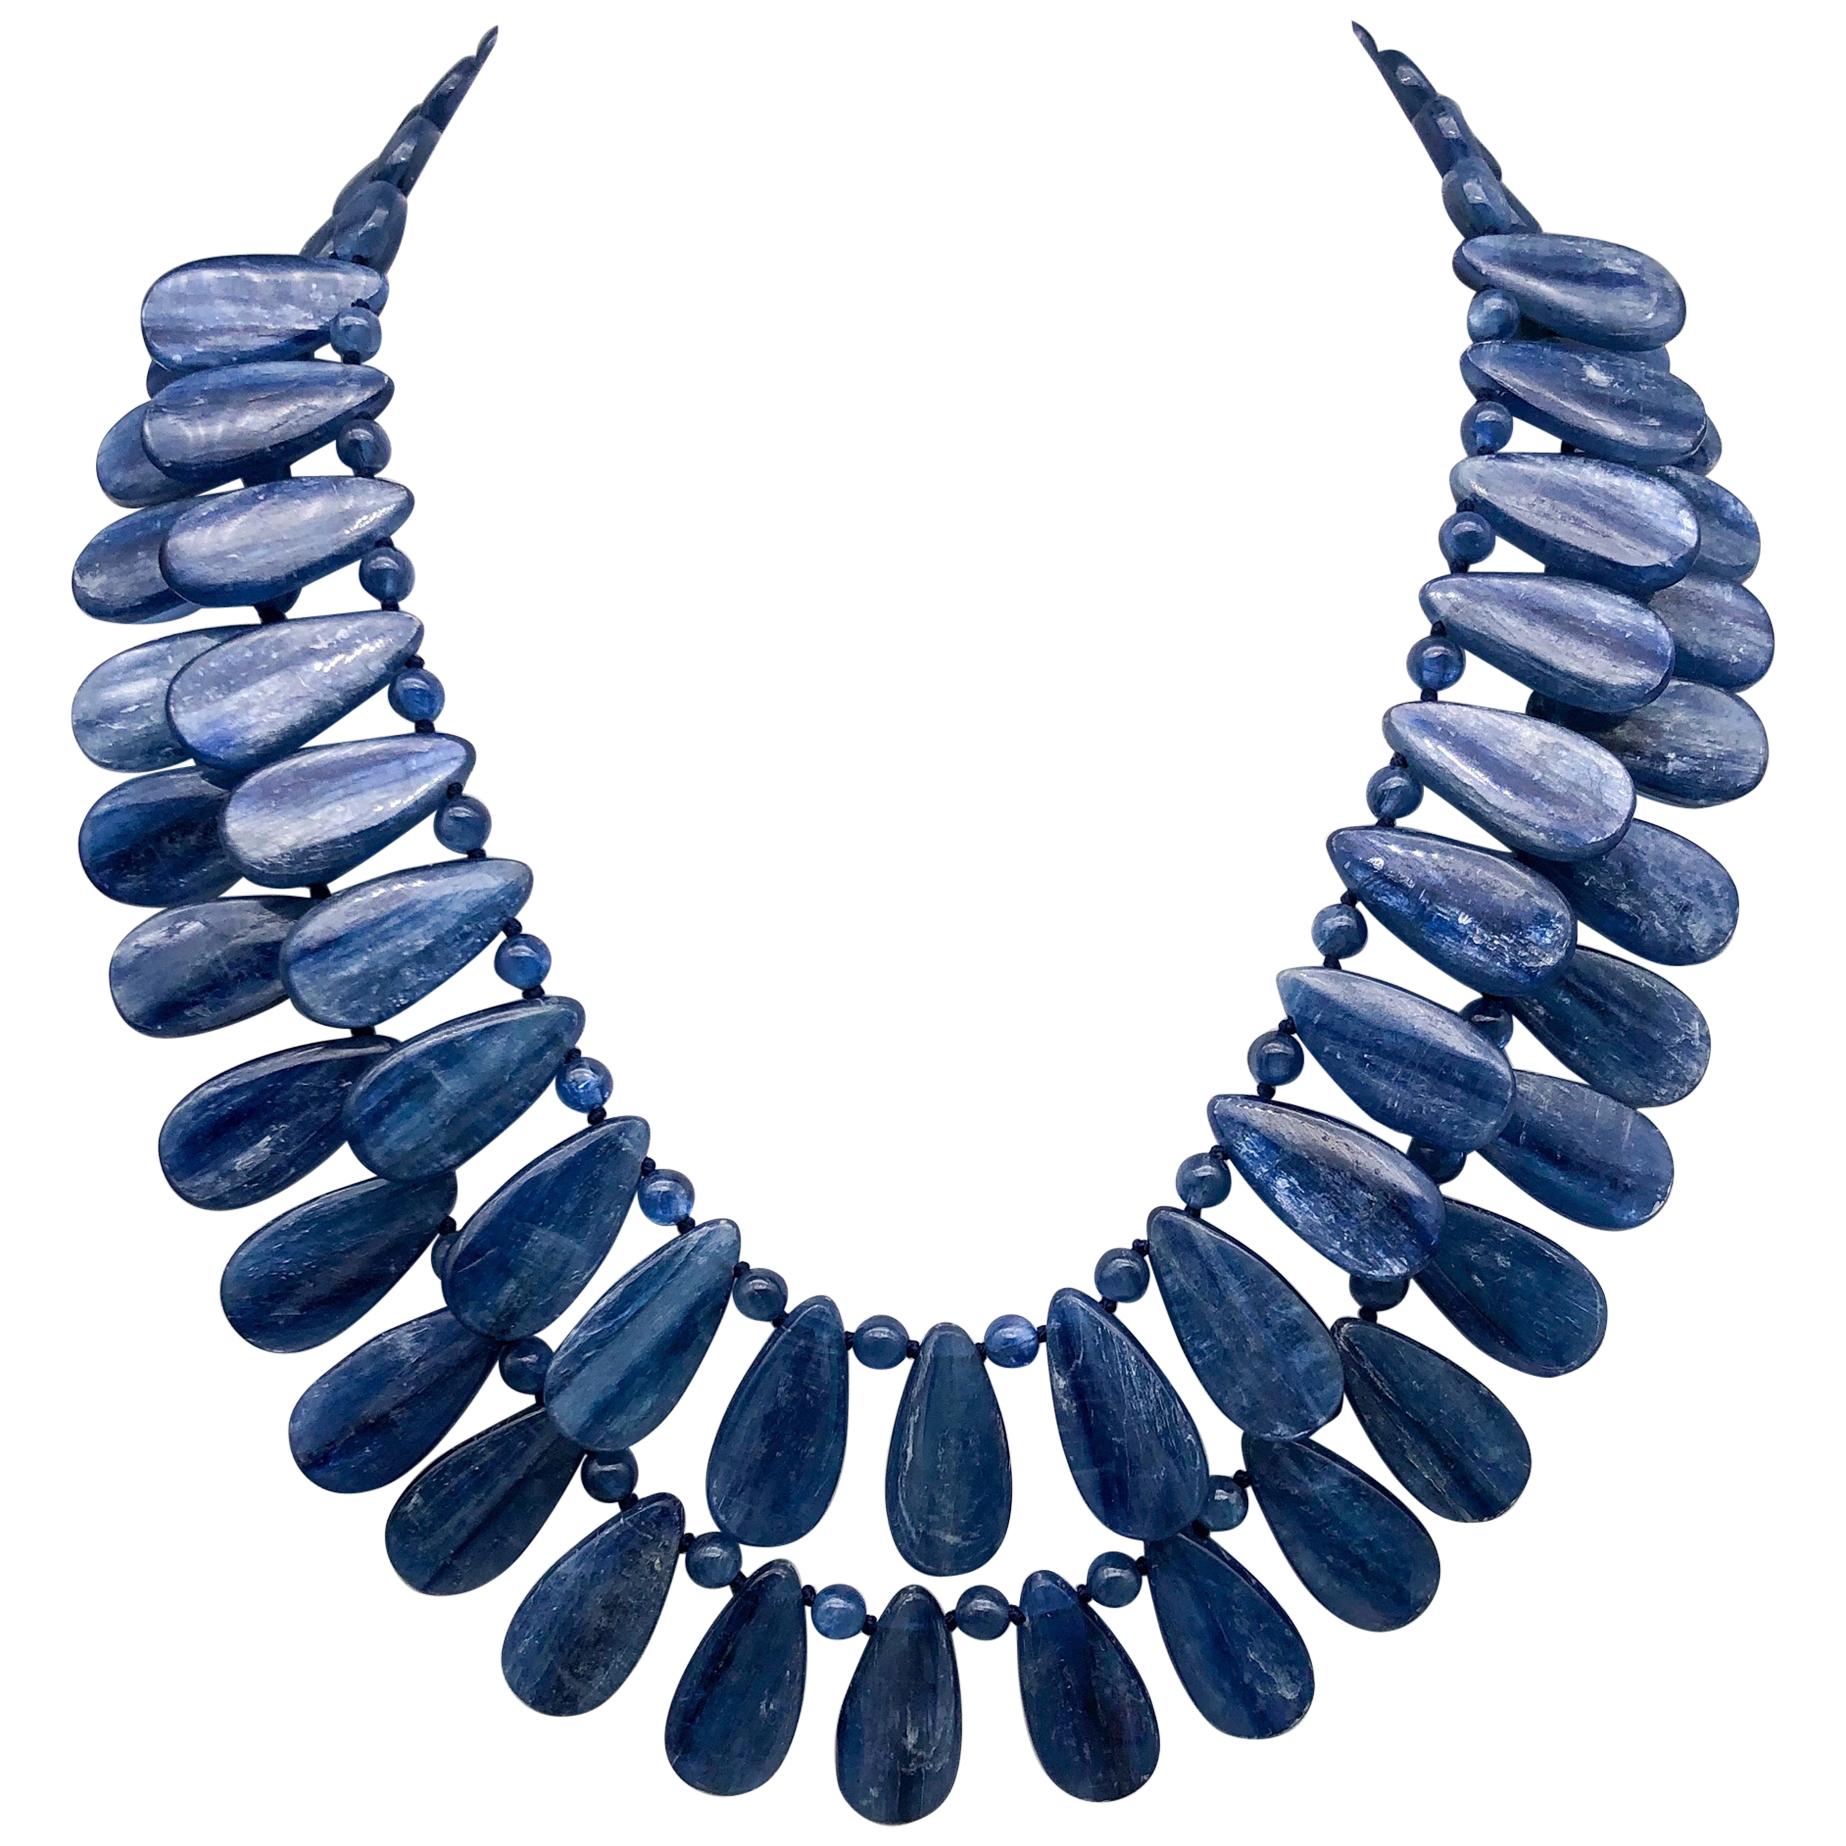 A.Jeschel A True Blue Kyanite 2 Strand Necklace.